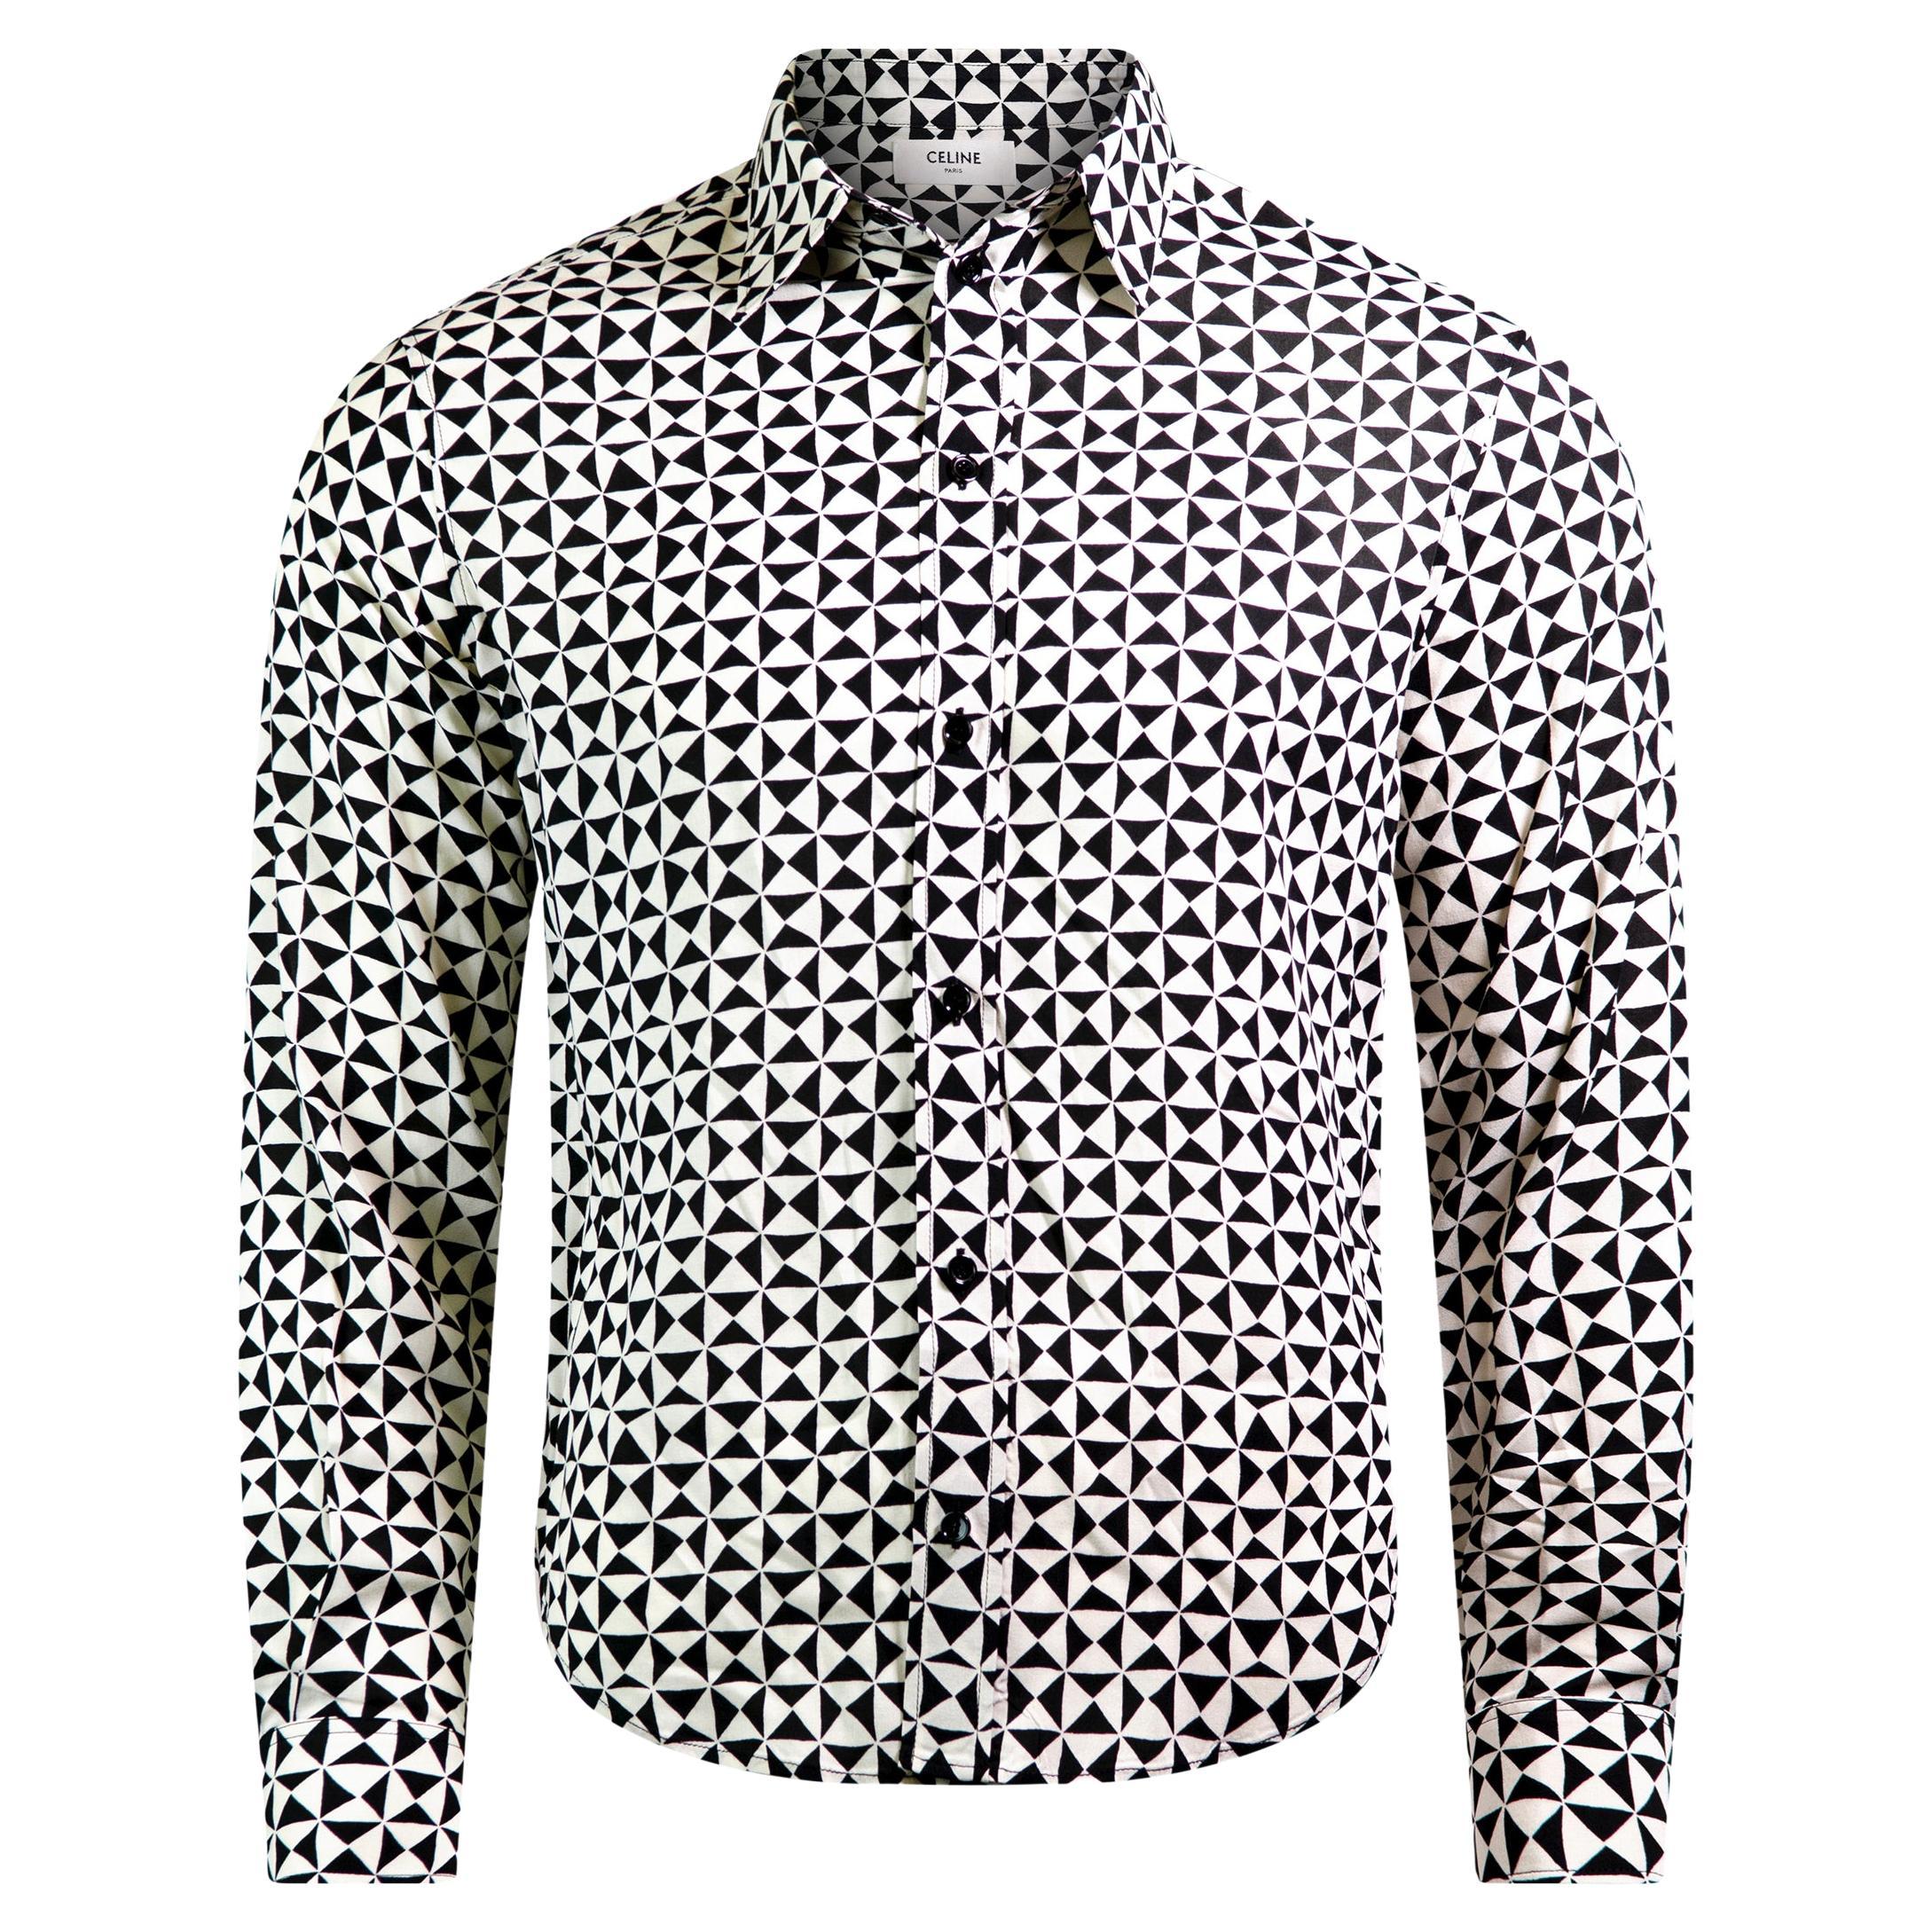 CELINE BY HEDI SLIMANE 70's Inspired Monochrome Shirt For Sale